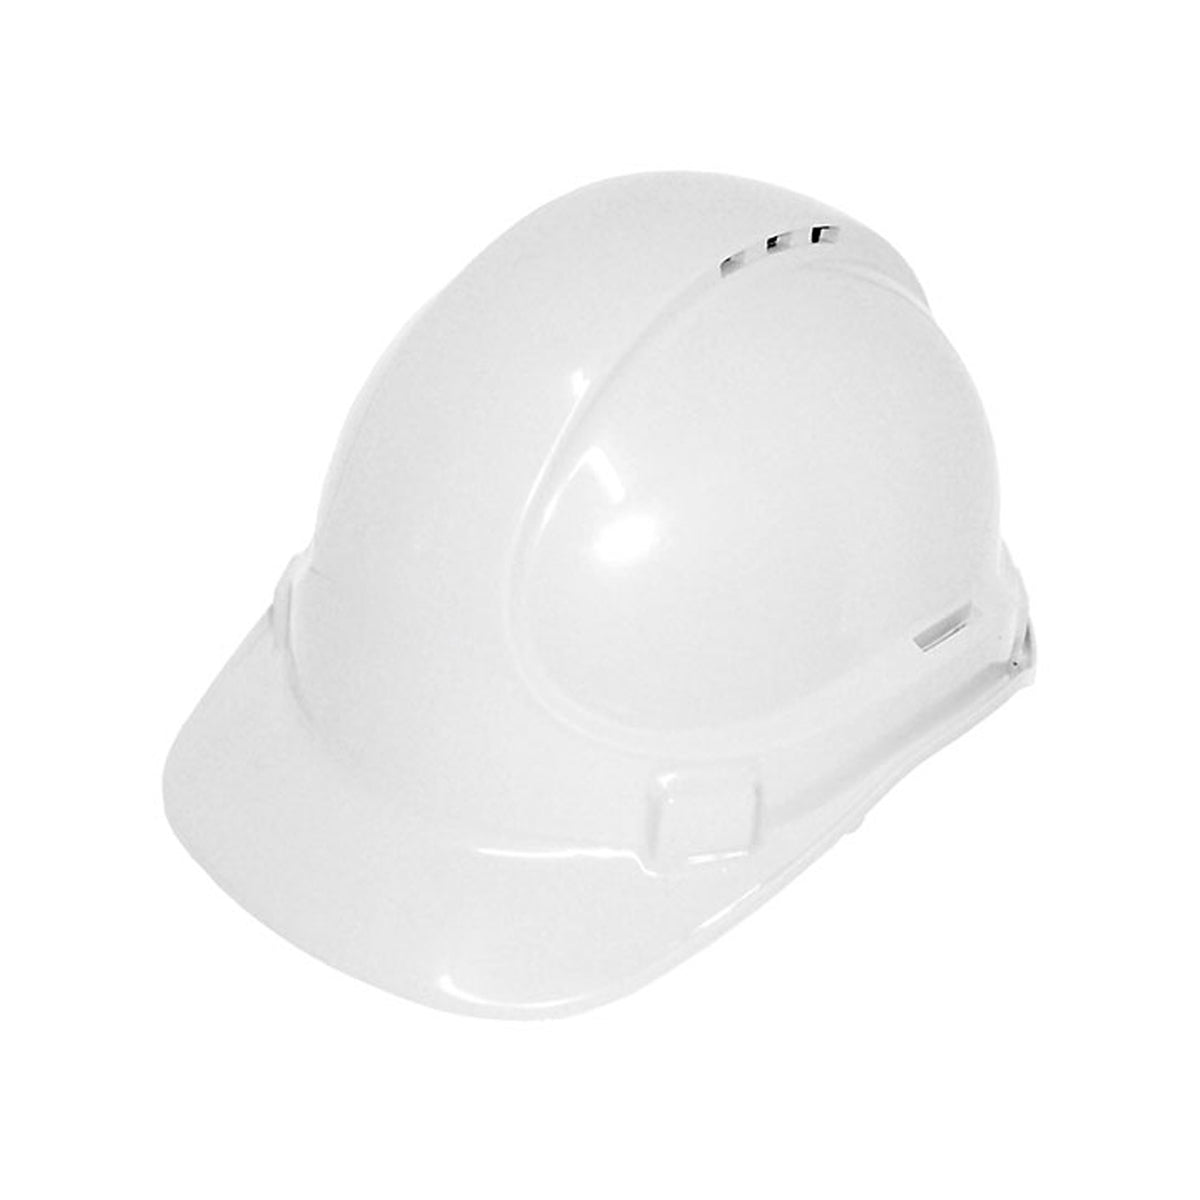 white safety helmet